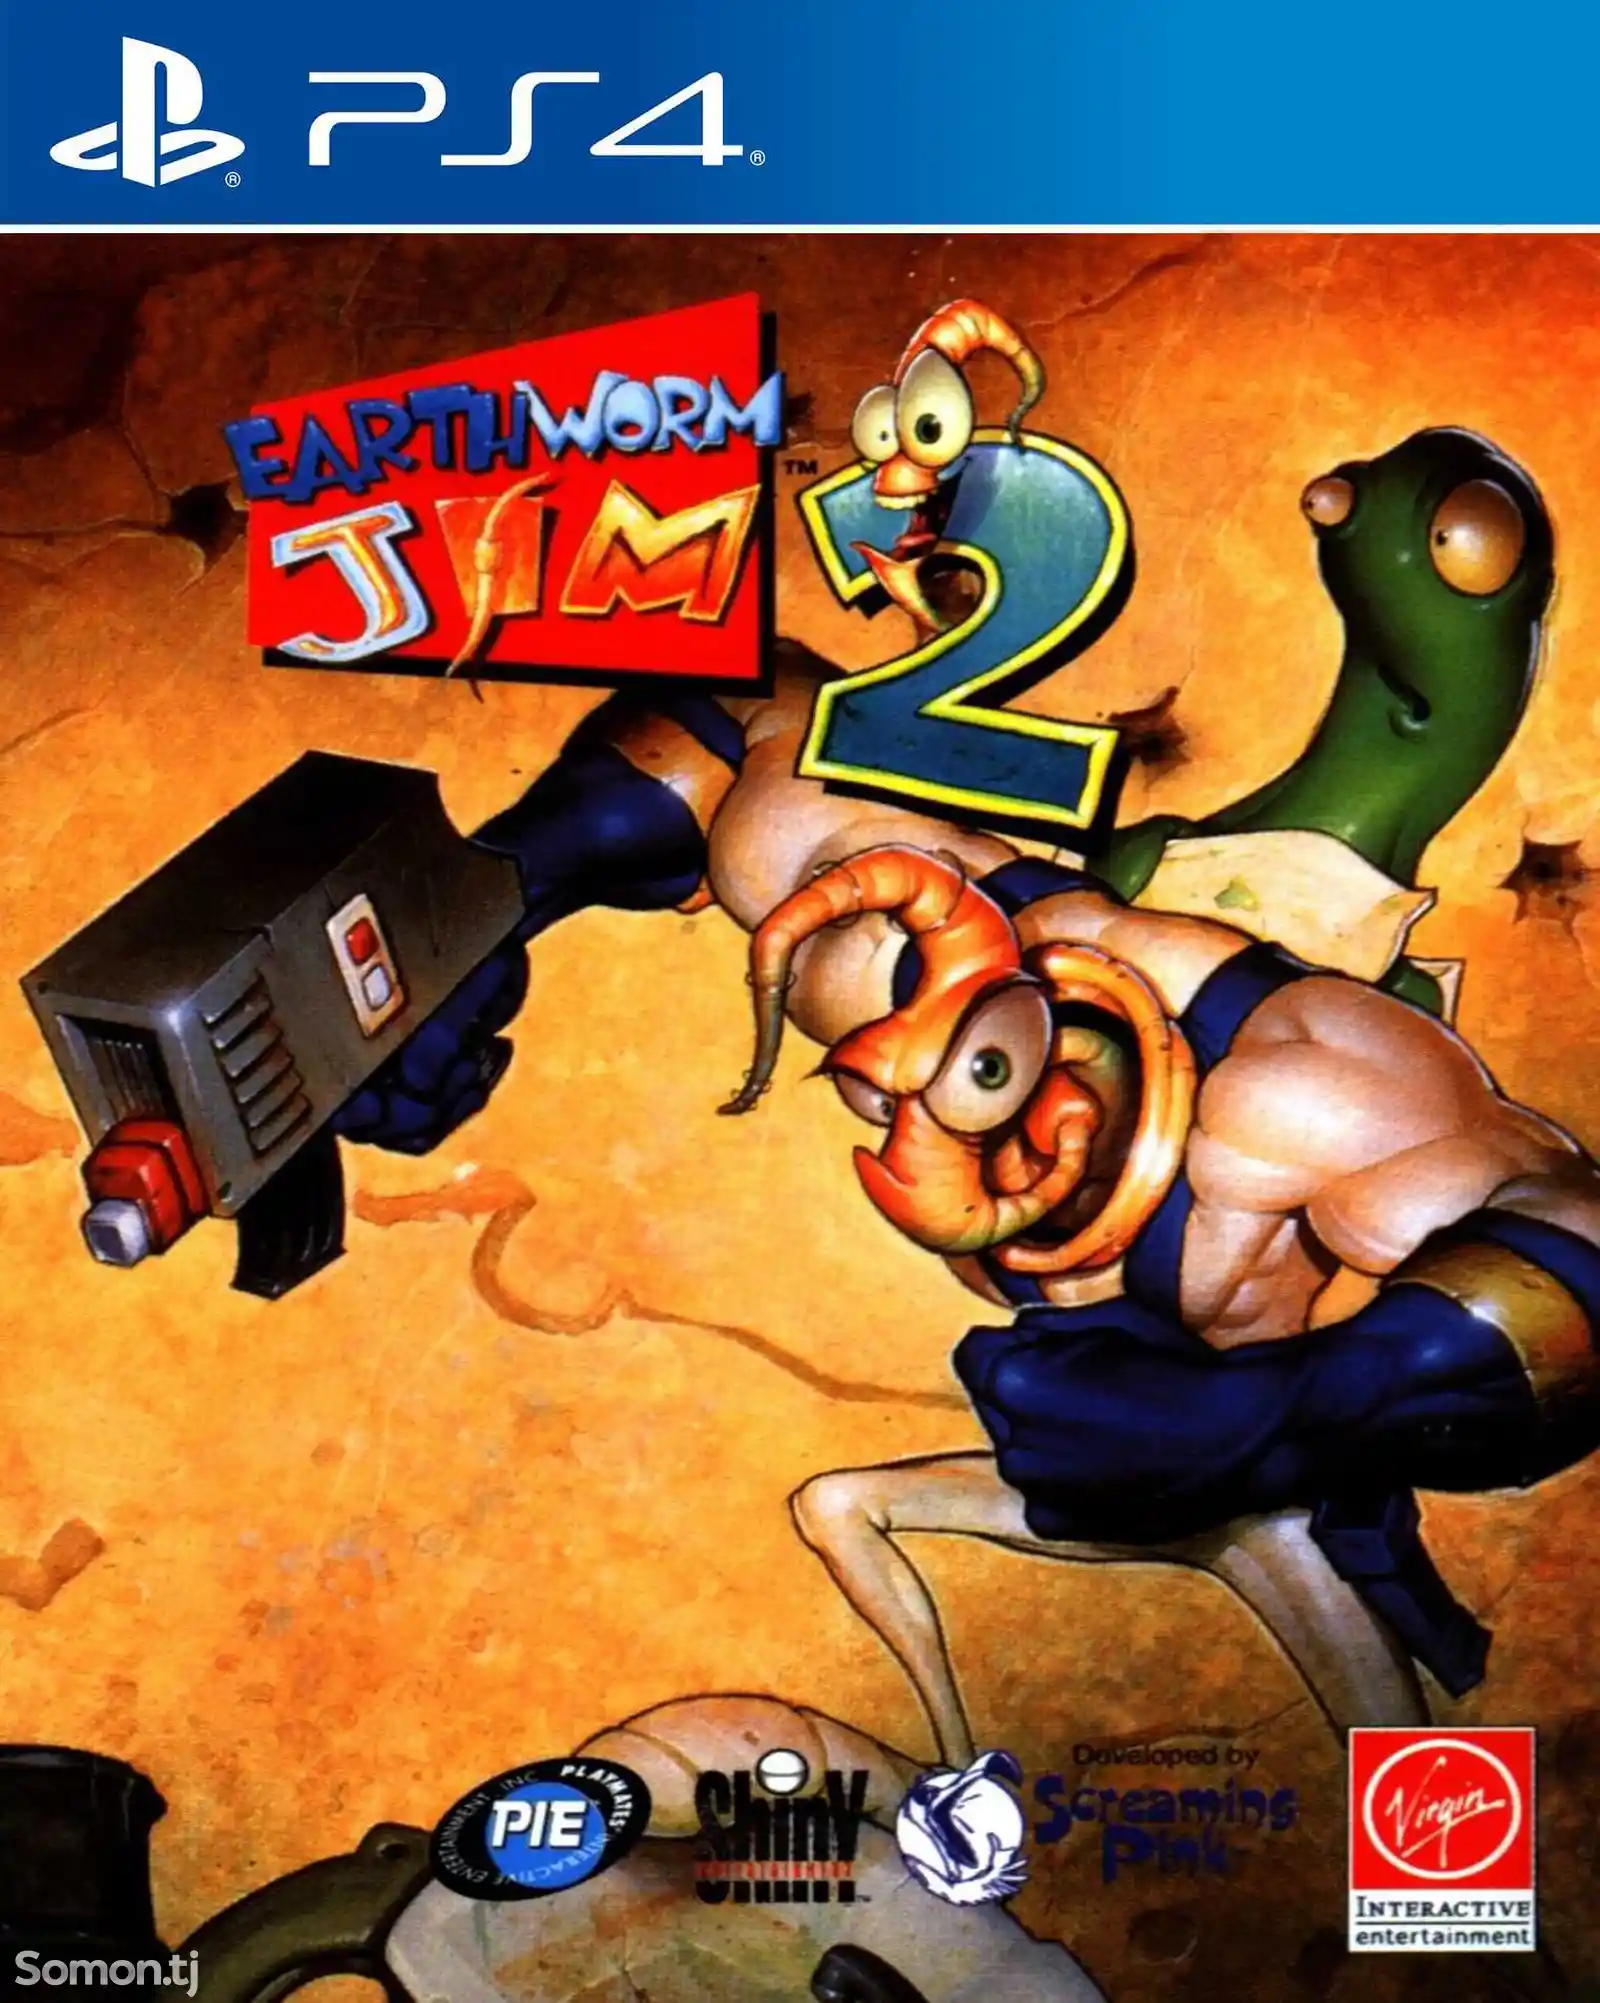 Игра Earthworm jim 2 для PS-4 / 5.05 / 6.72 / 7.02 / 7.55 / 9.00 /-1